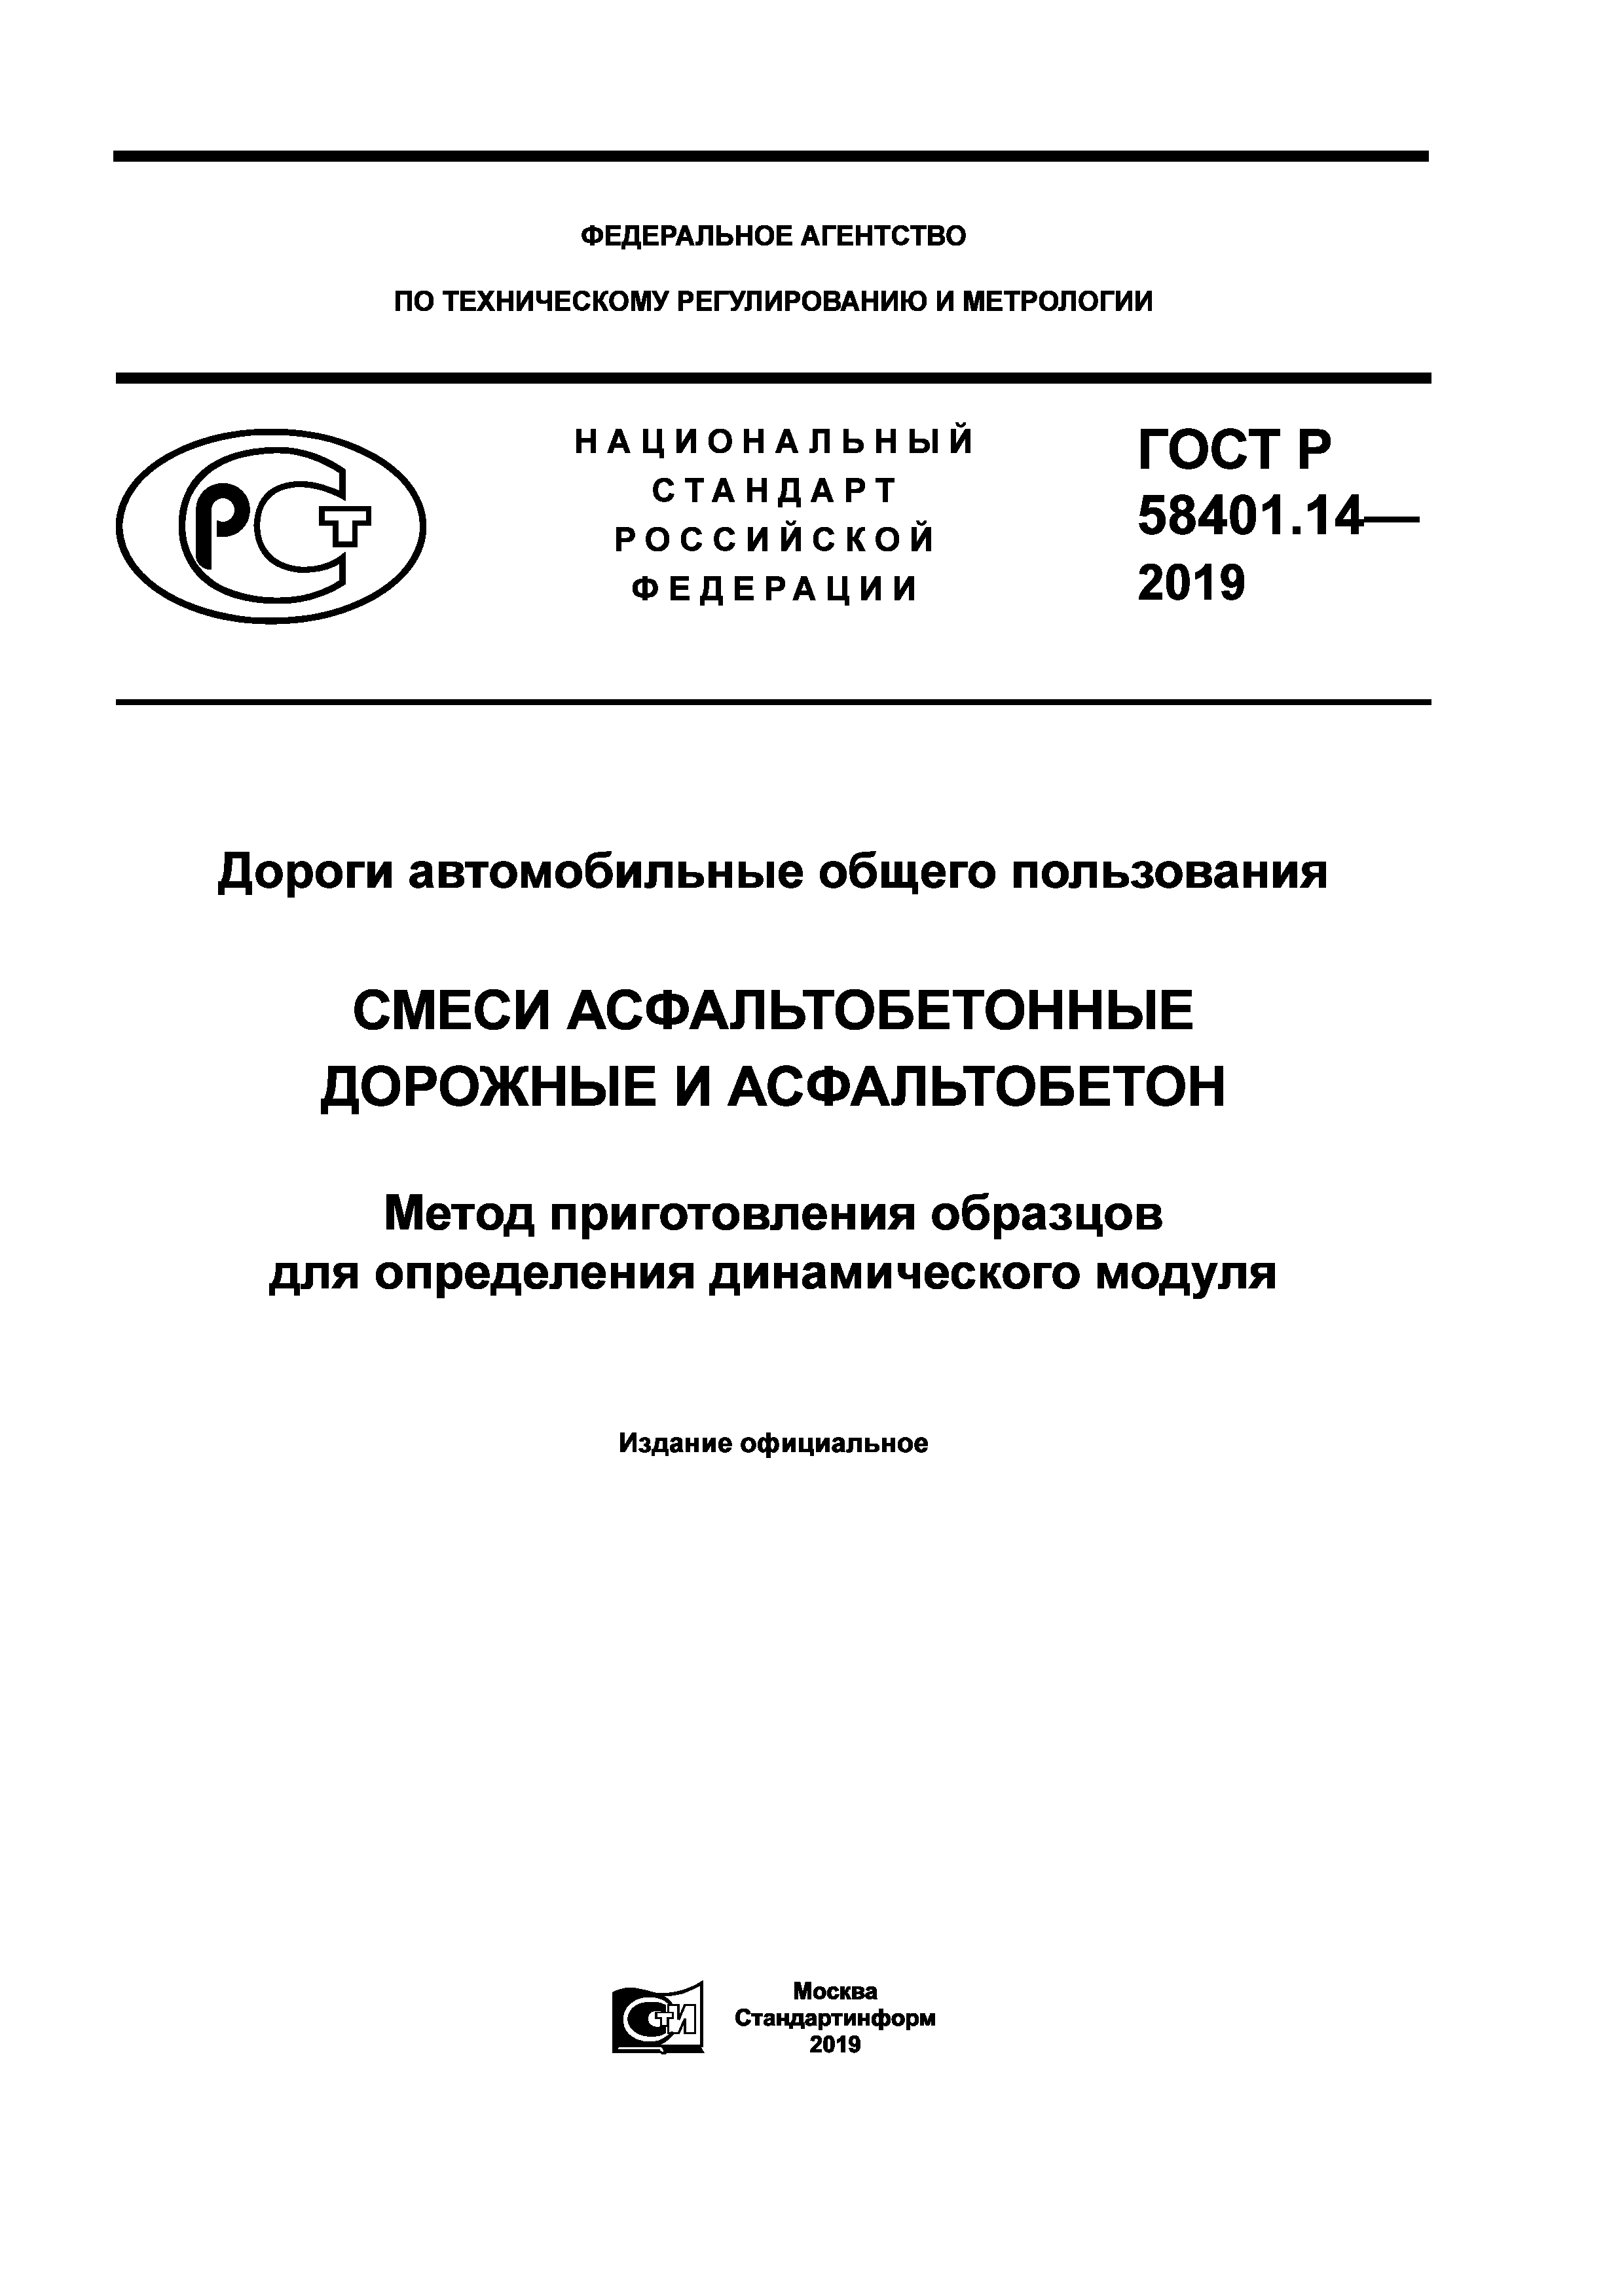 ГОСТ Р 58401.14-2019